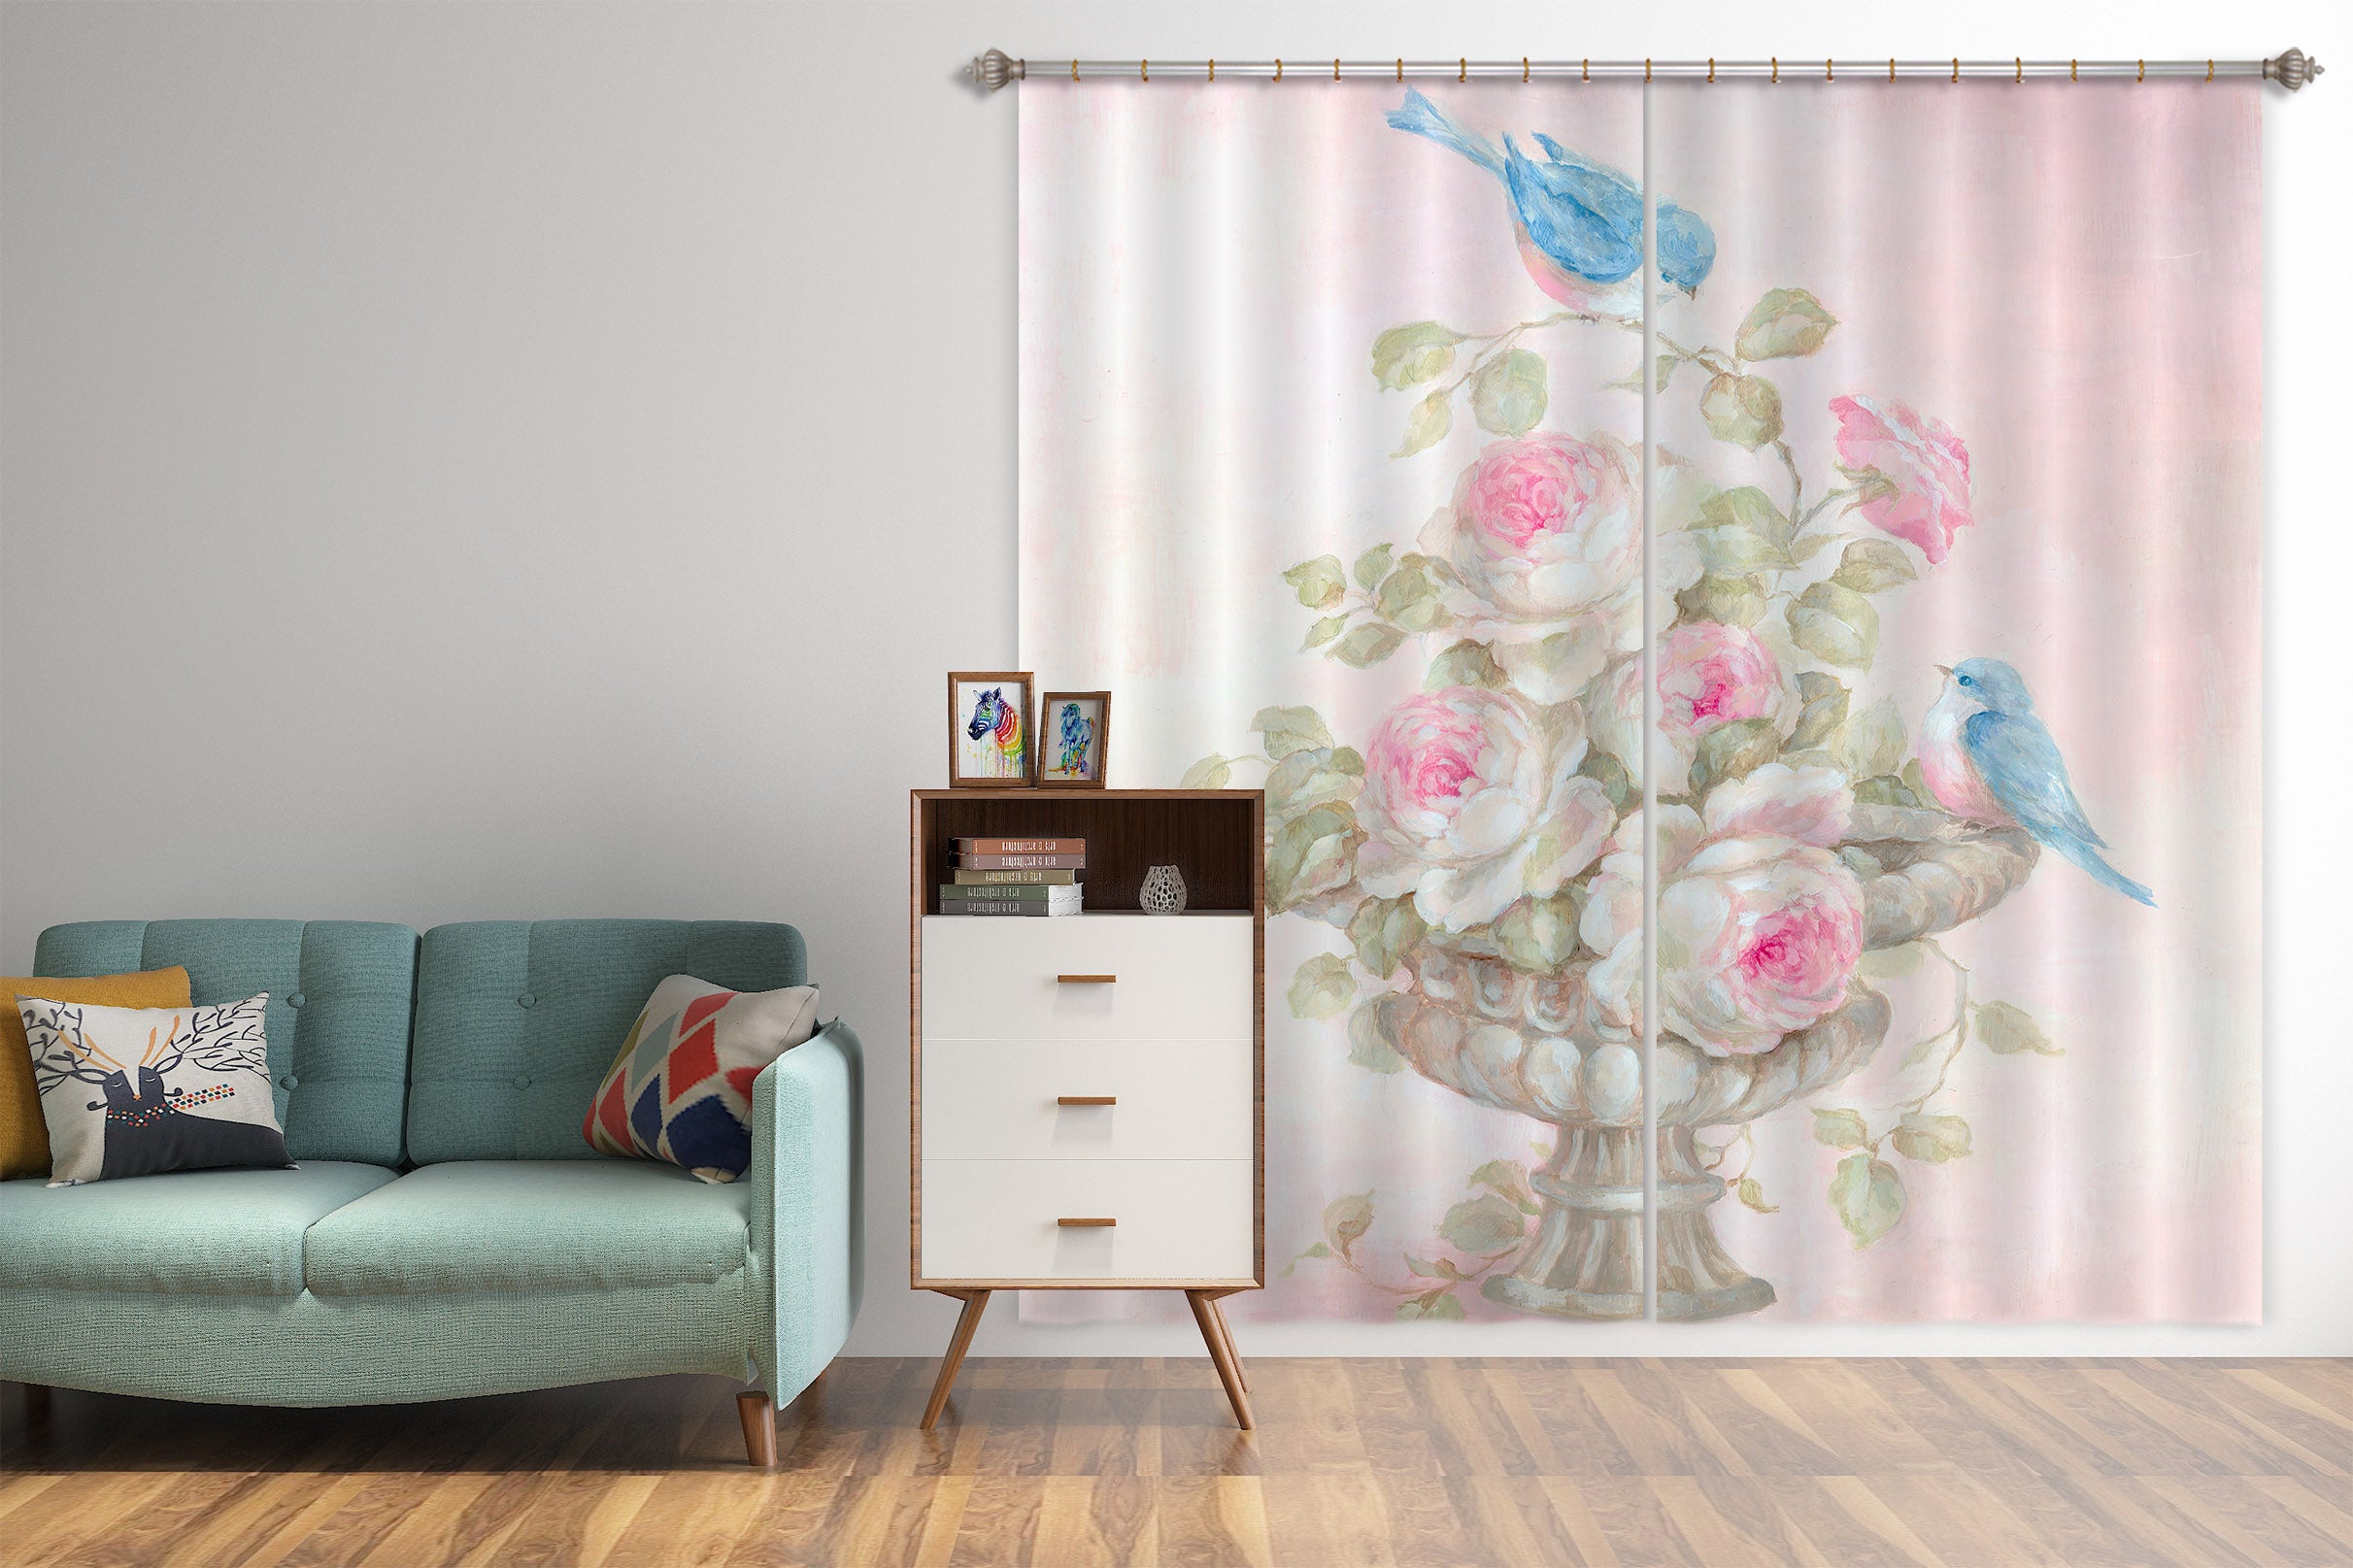 3D White-Pink Flowerpot Bird 3083 Debi Coules Curtain Curtains Drapes